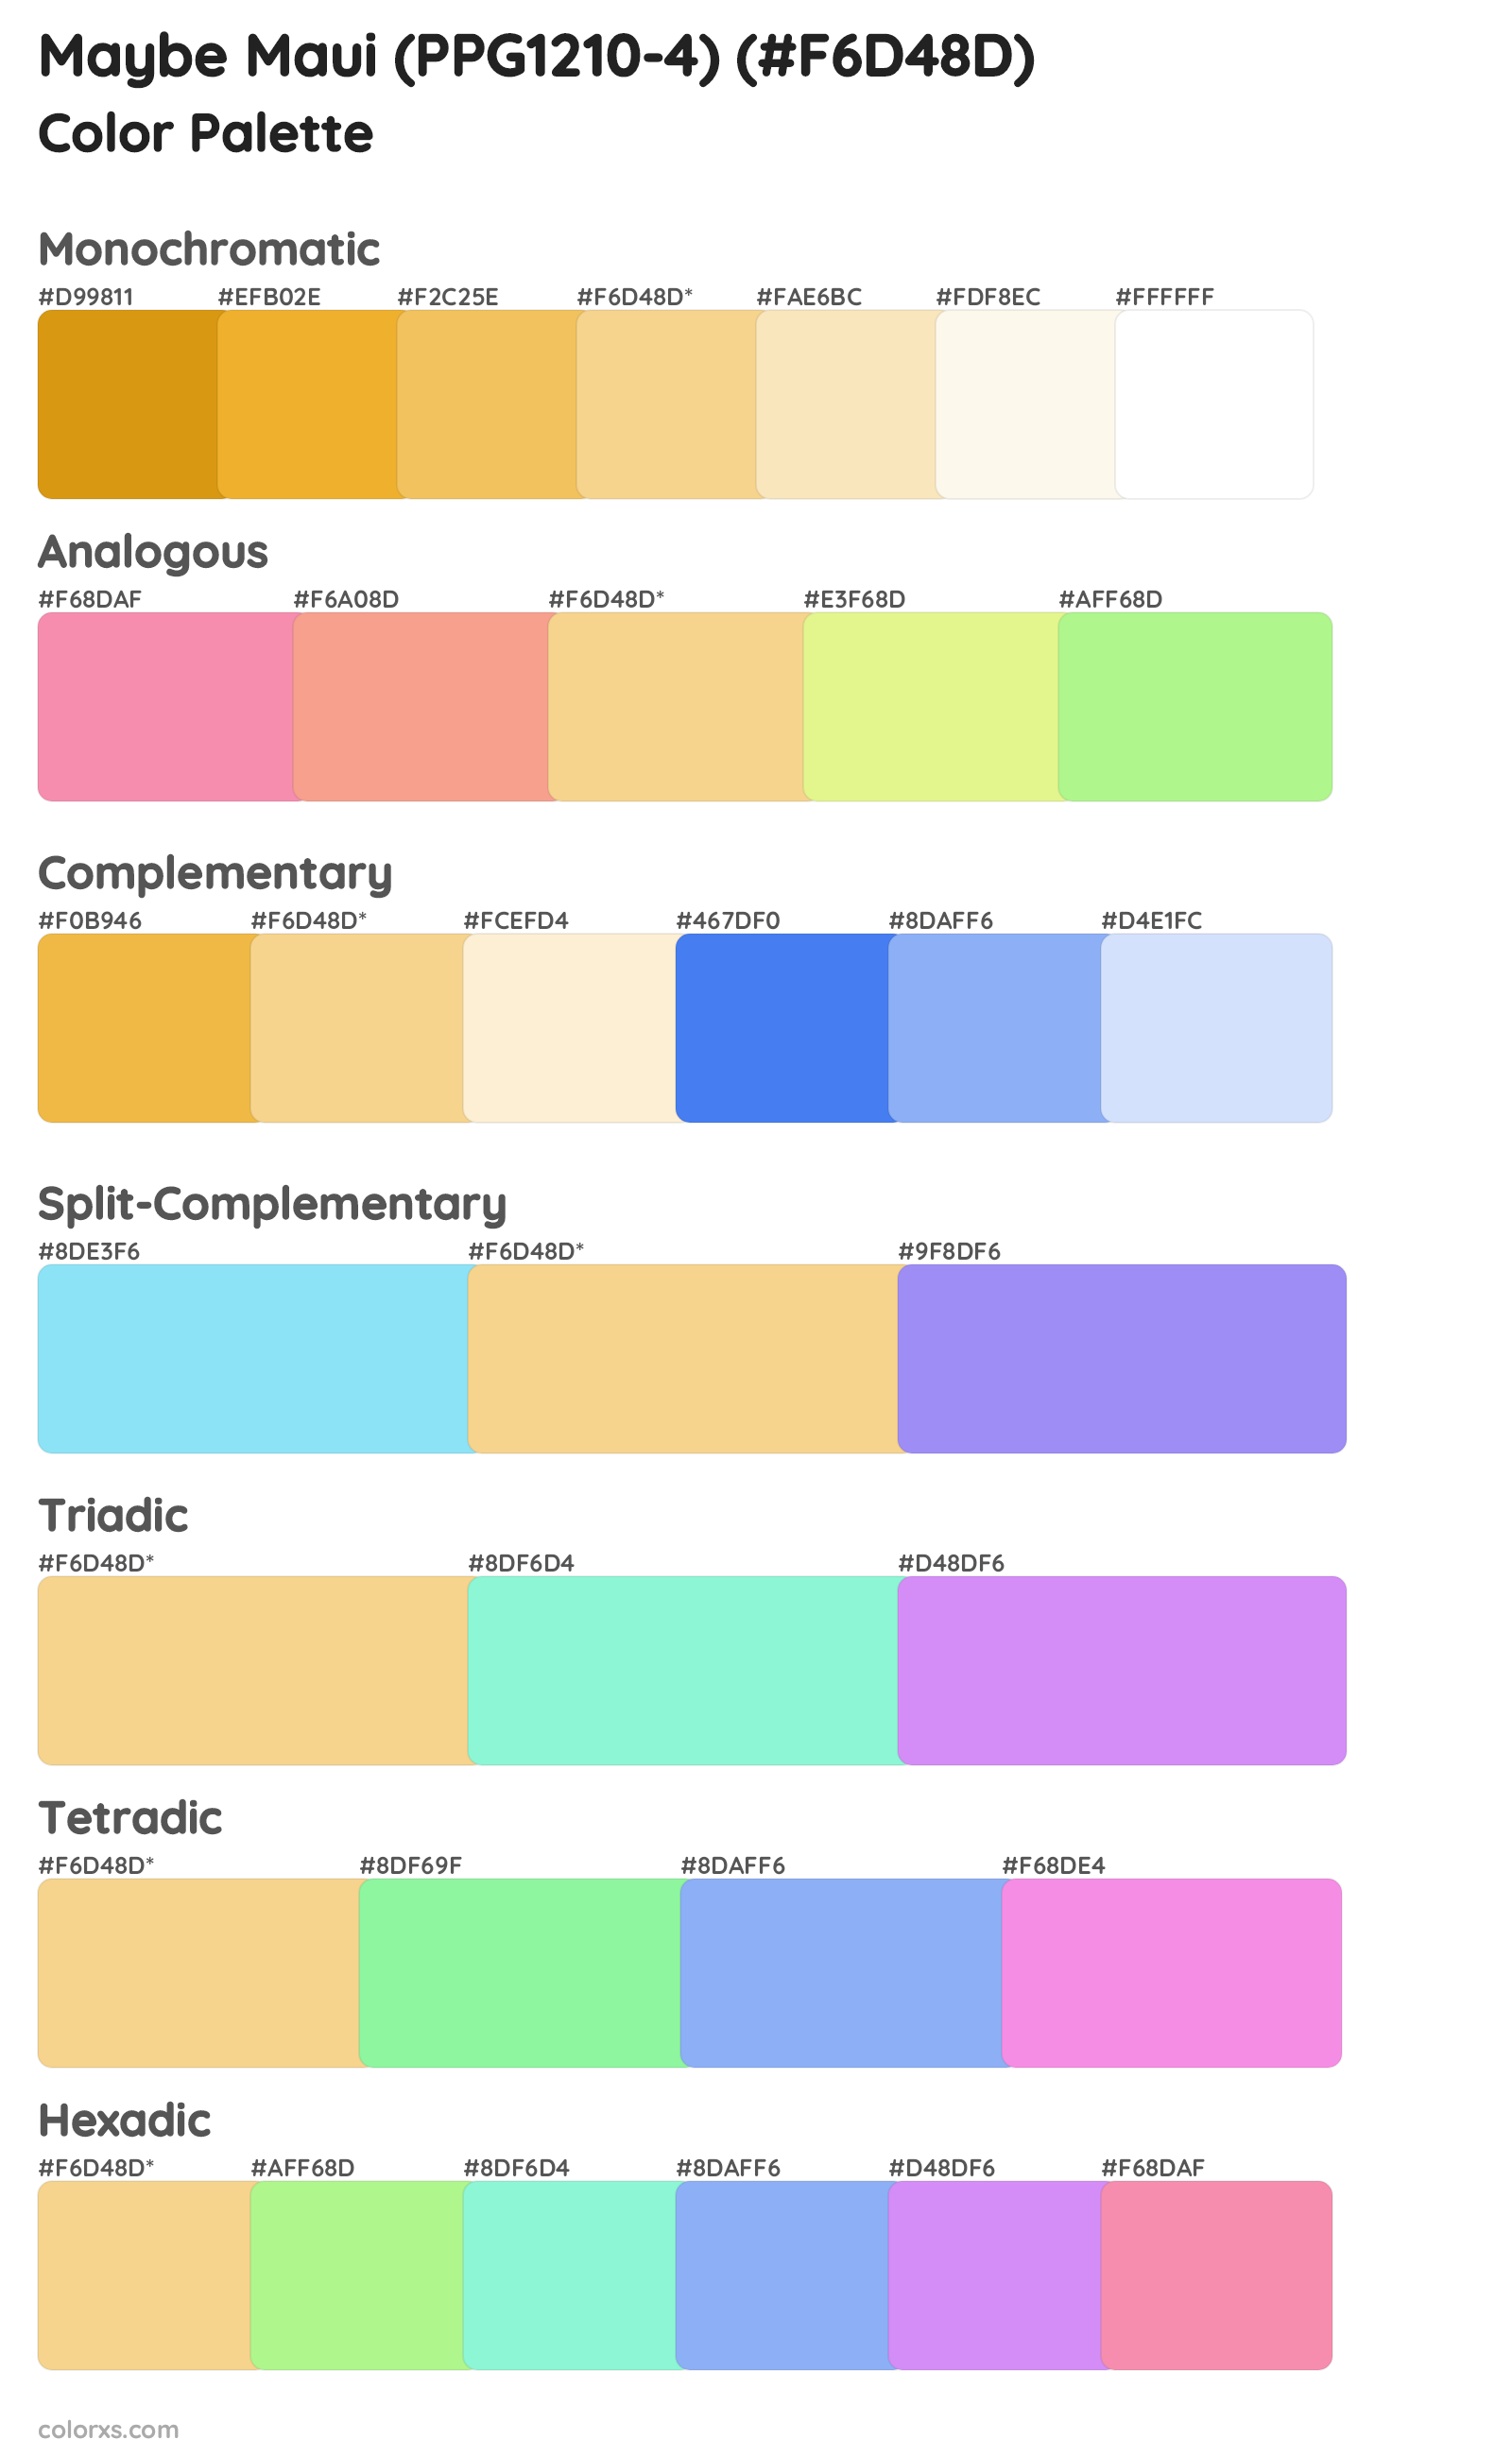 Maybe Maui (PPG1210-4) Color Scheme Palettes